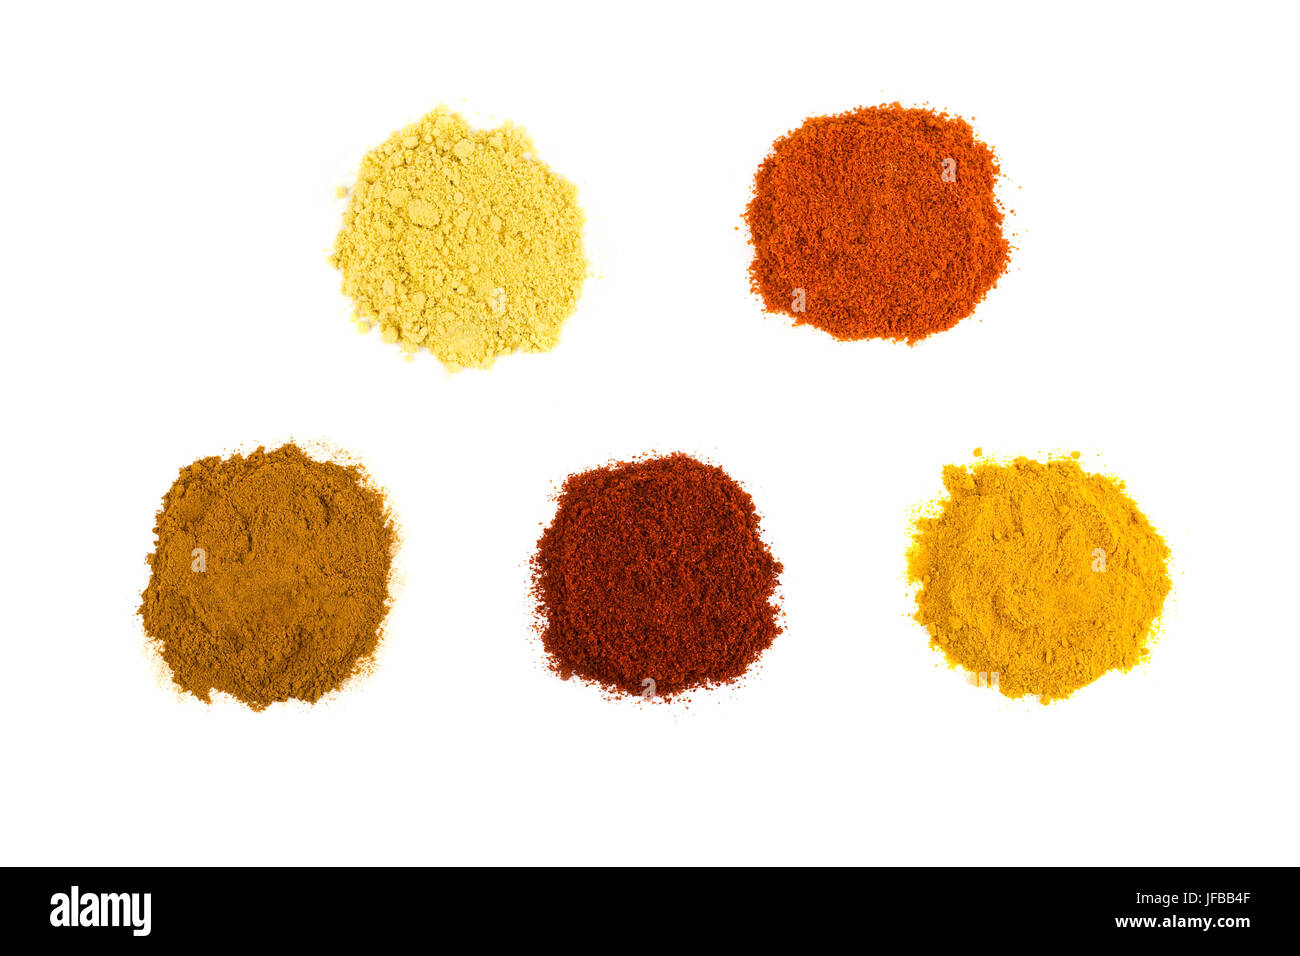 Heaps of various seasoning spices on white Stock Photo